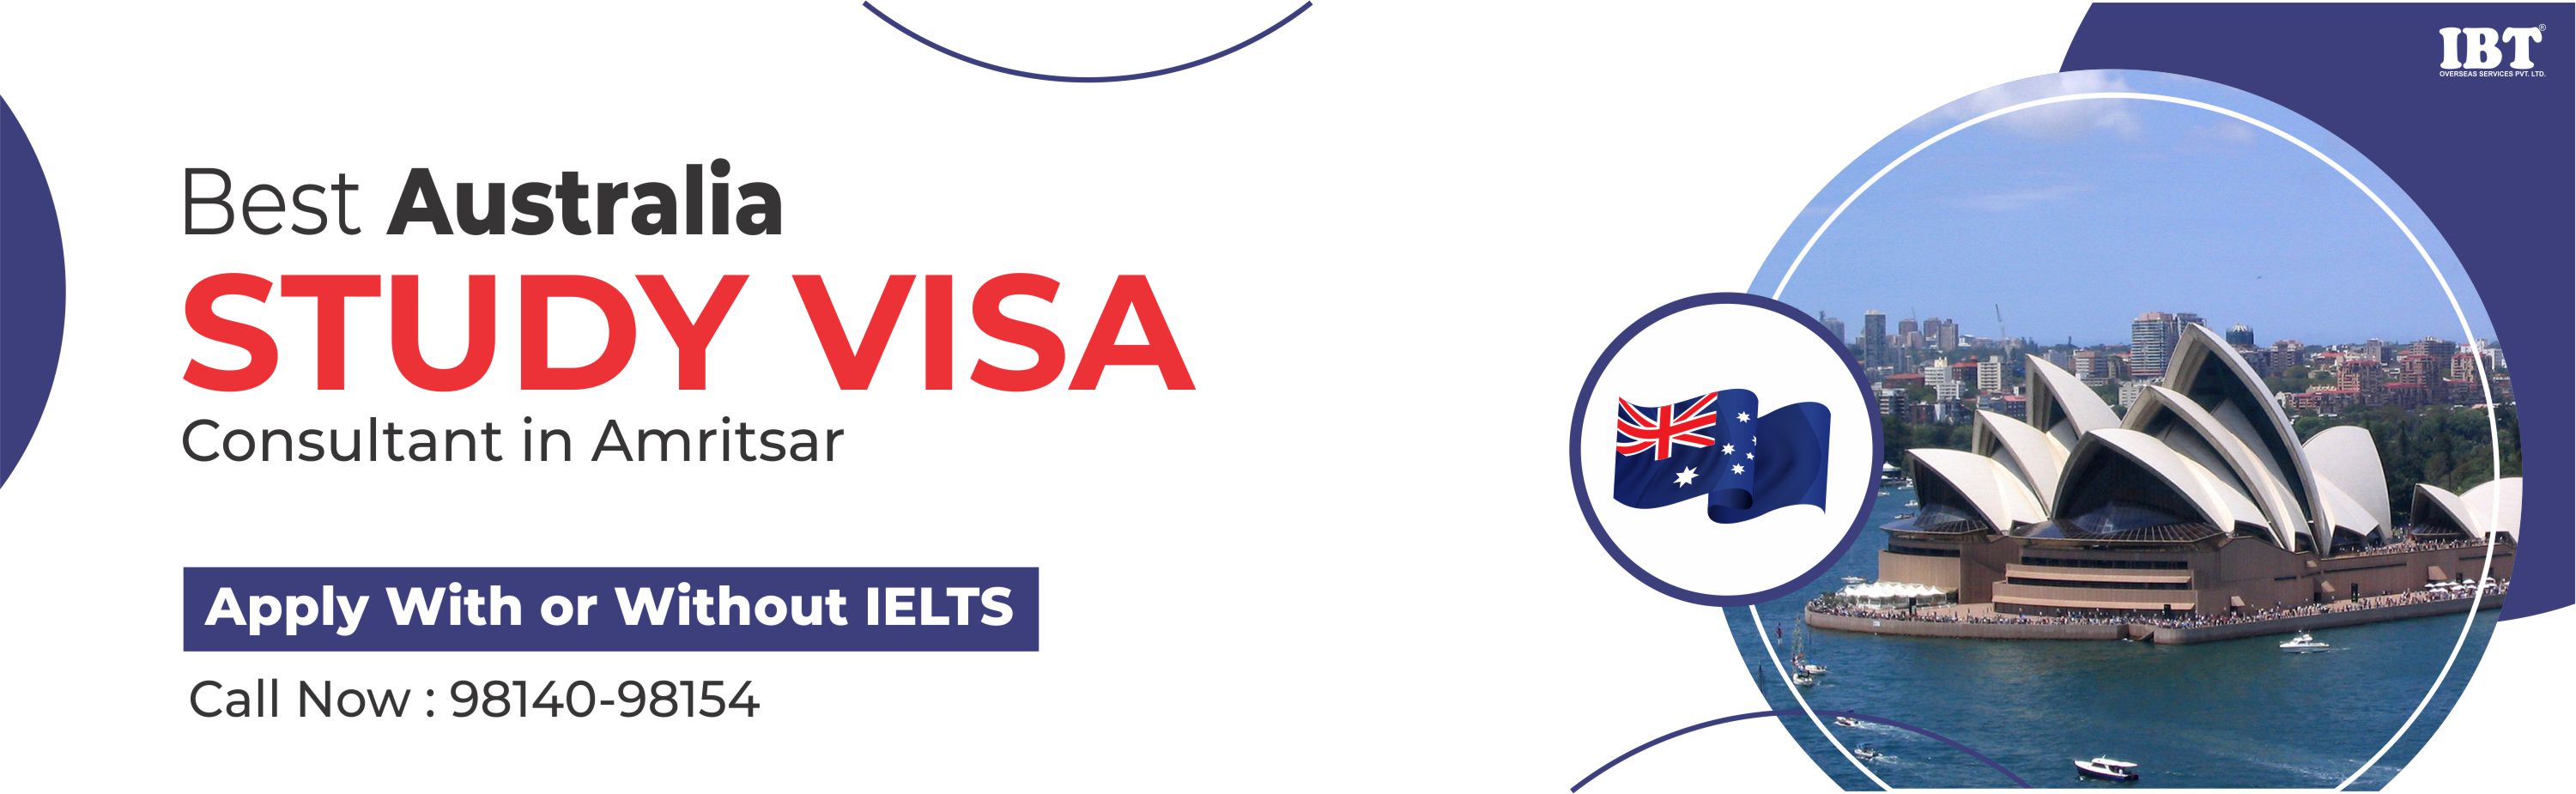 Australia Study Visa Amritsar